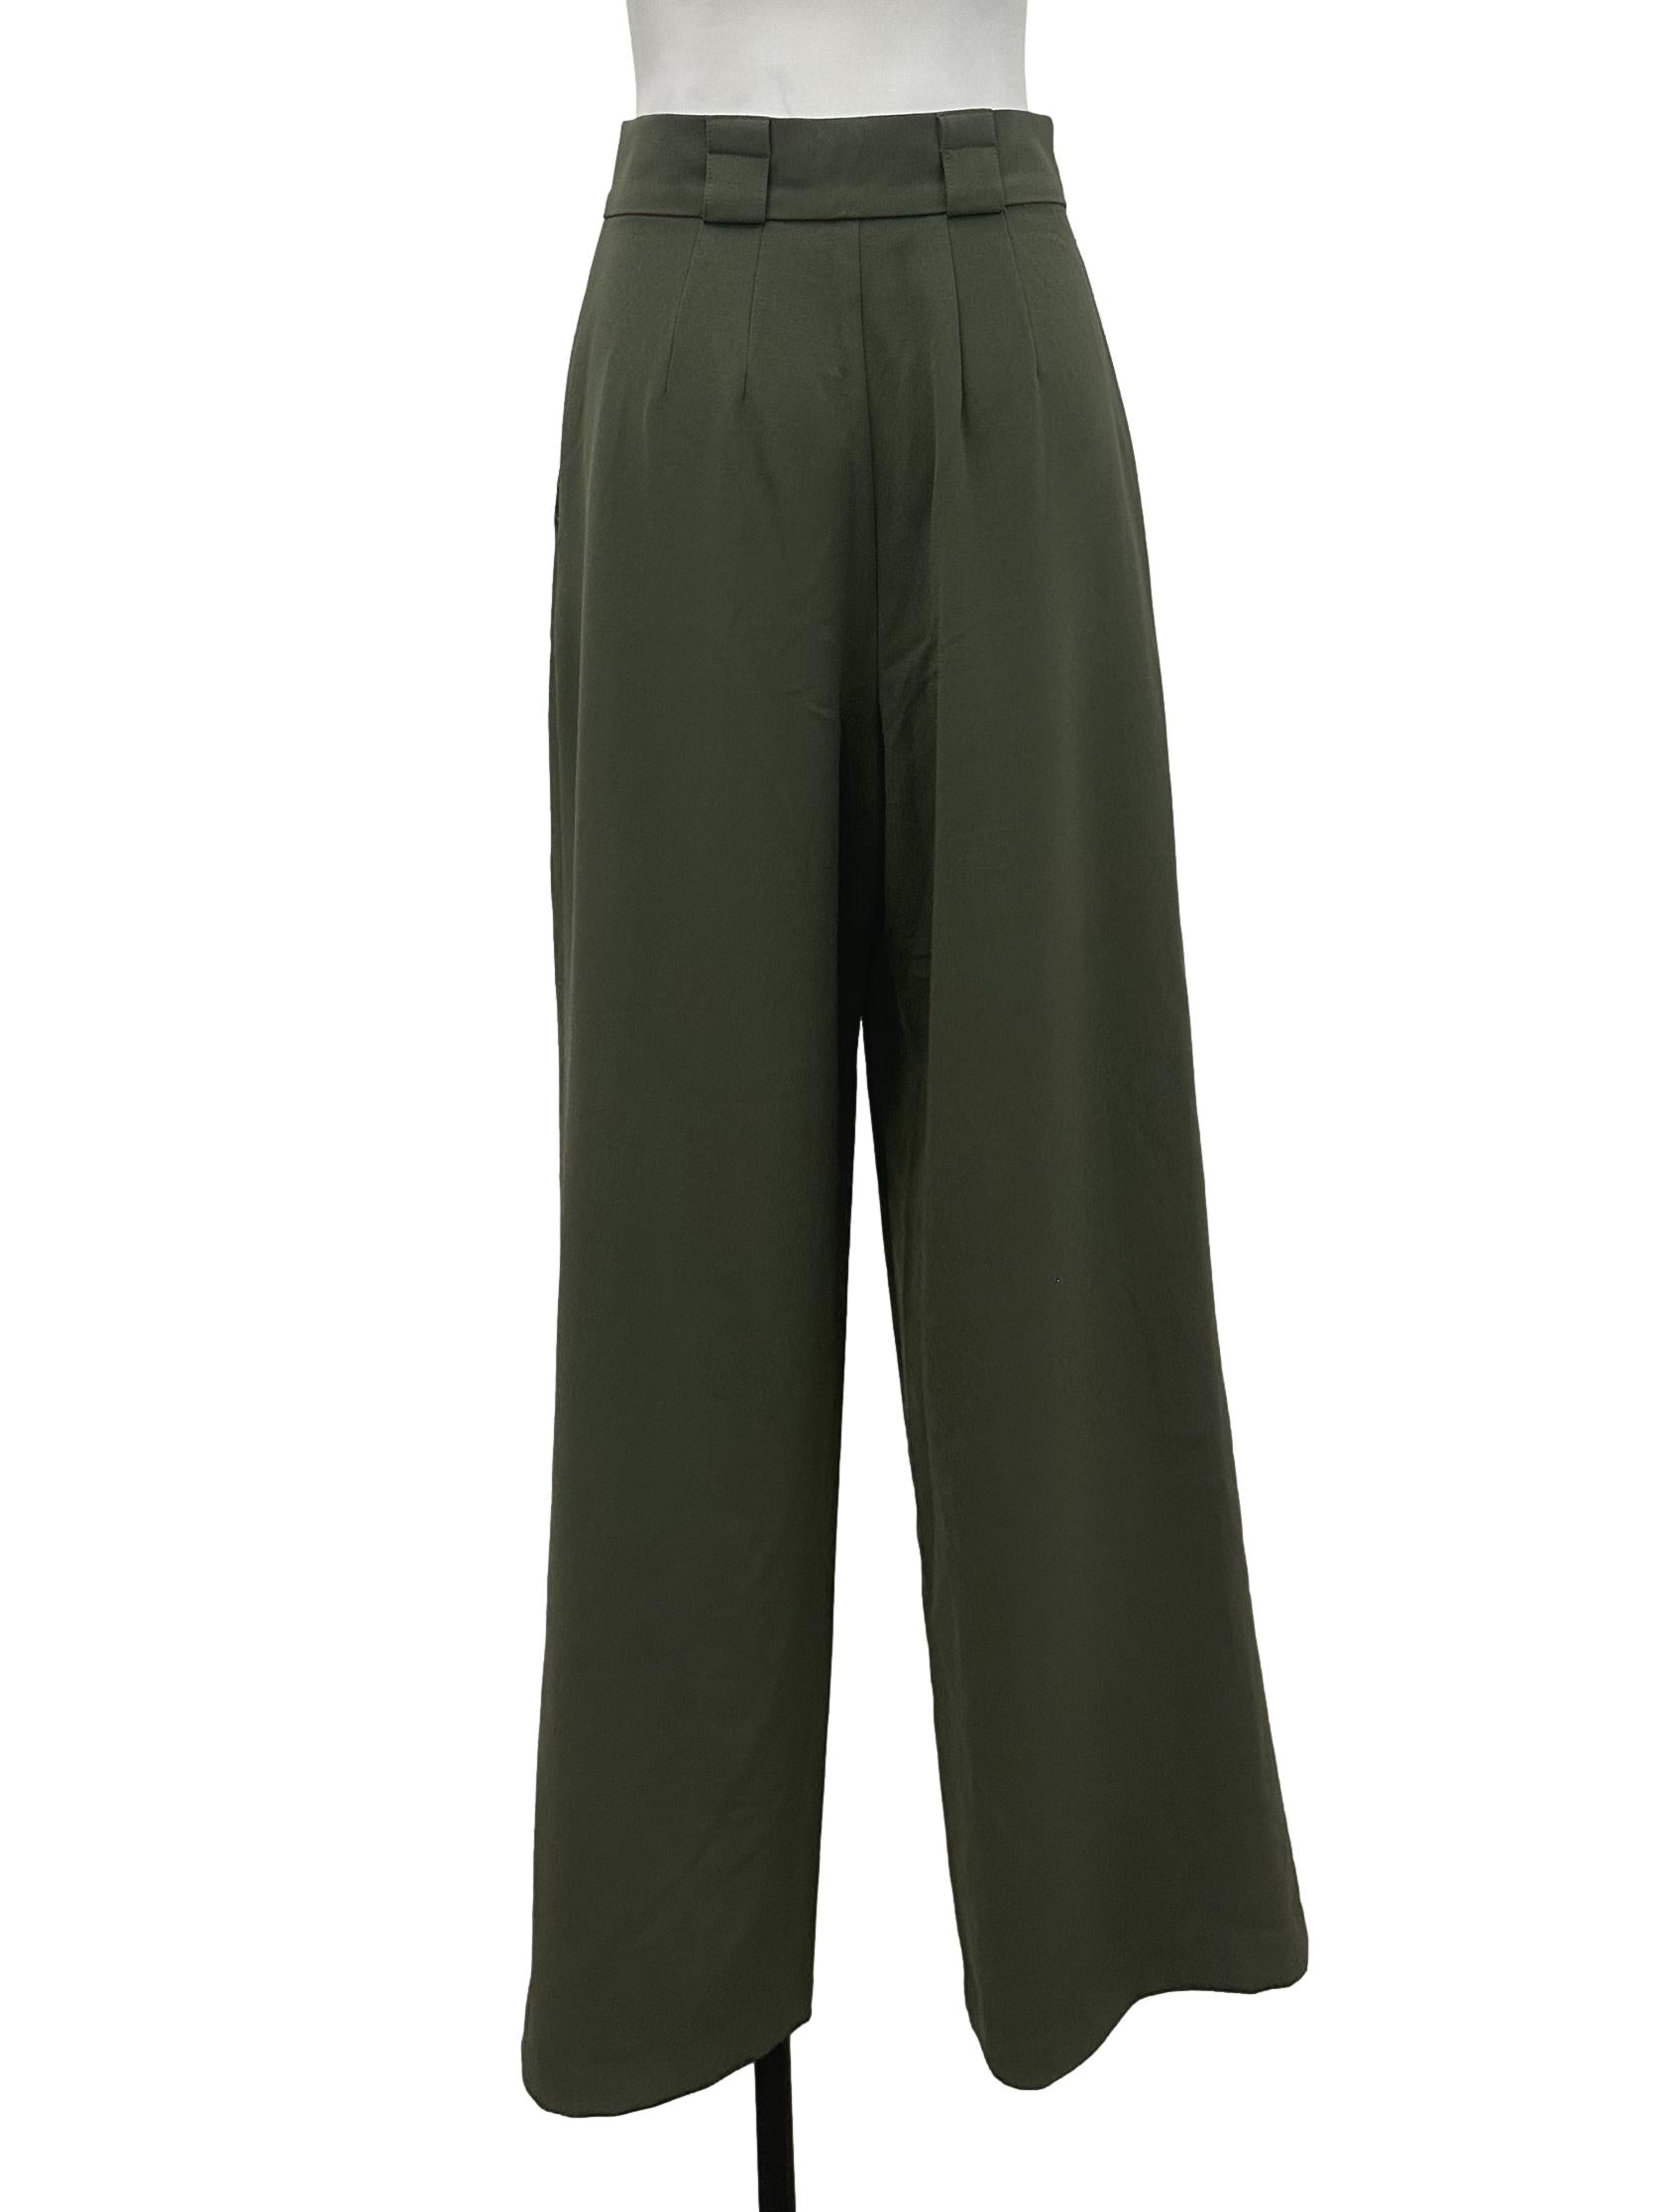 Army Green Pants LB